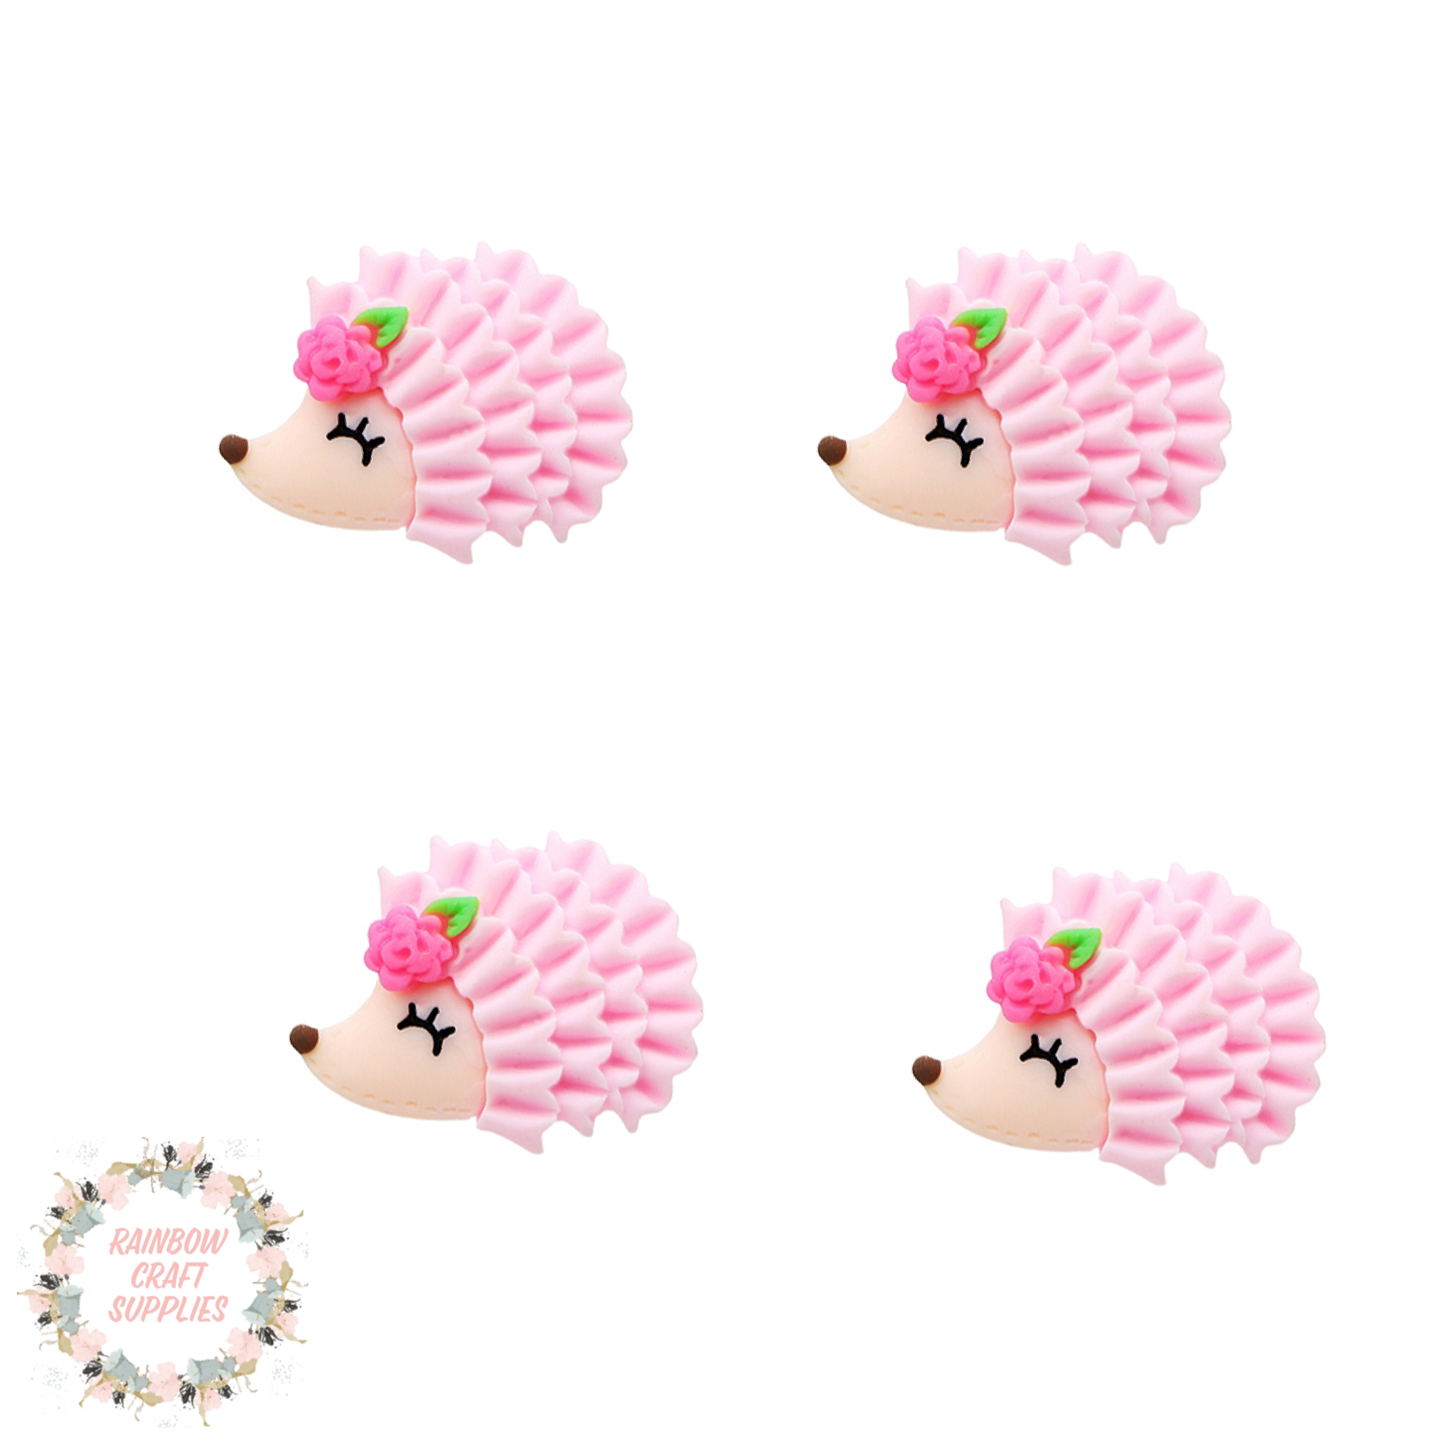 Cute little pink hedgehog